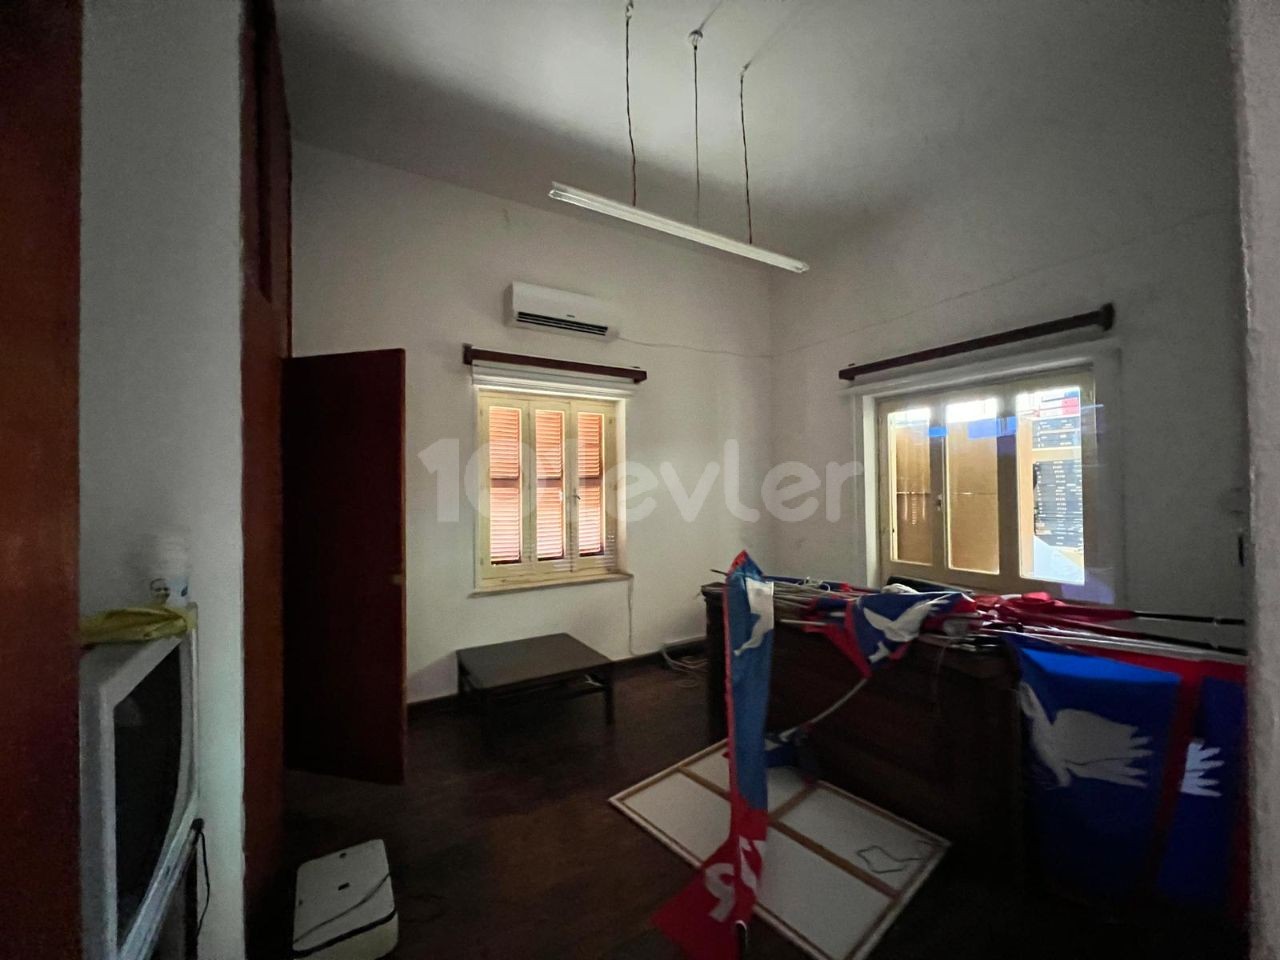 Ground Floor Apartment for Rent in Dereboyu District of Nicosia ** 